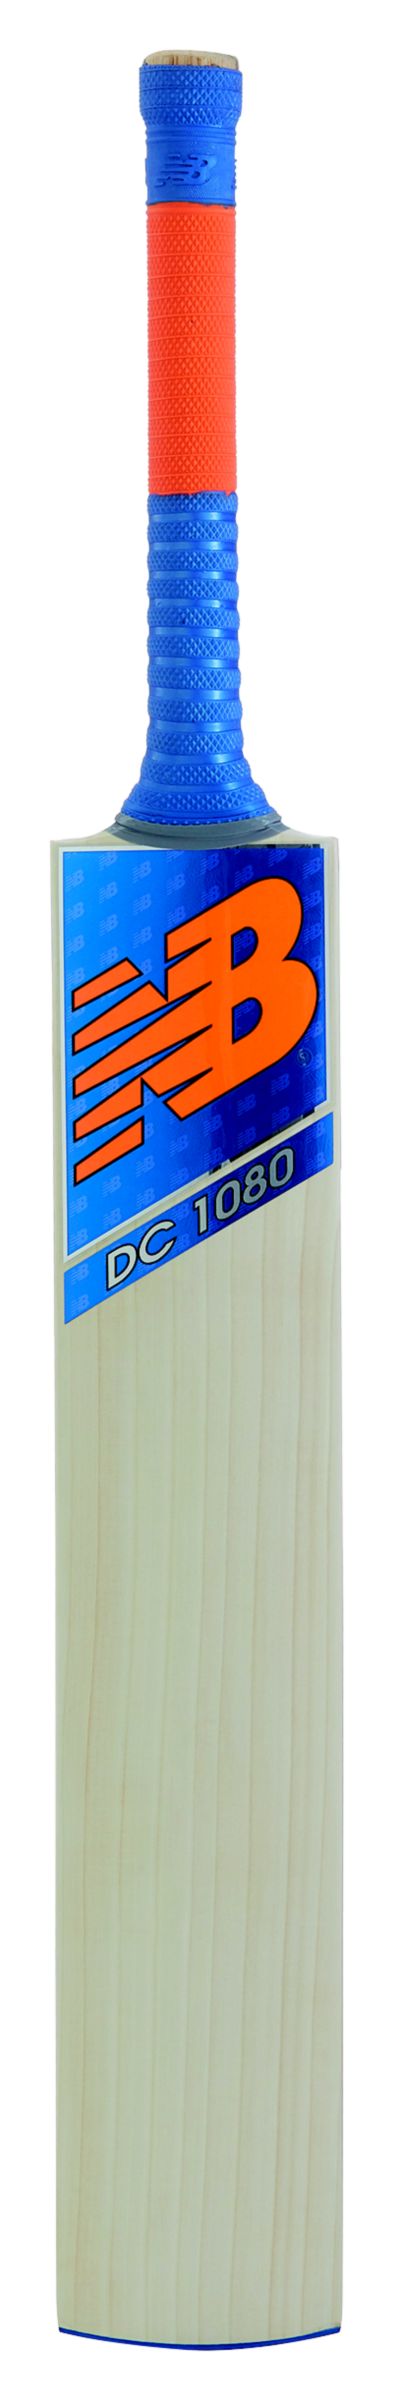 nb 1080 bat